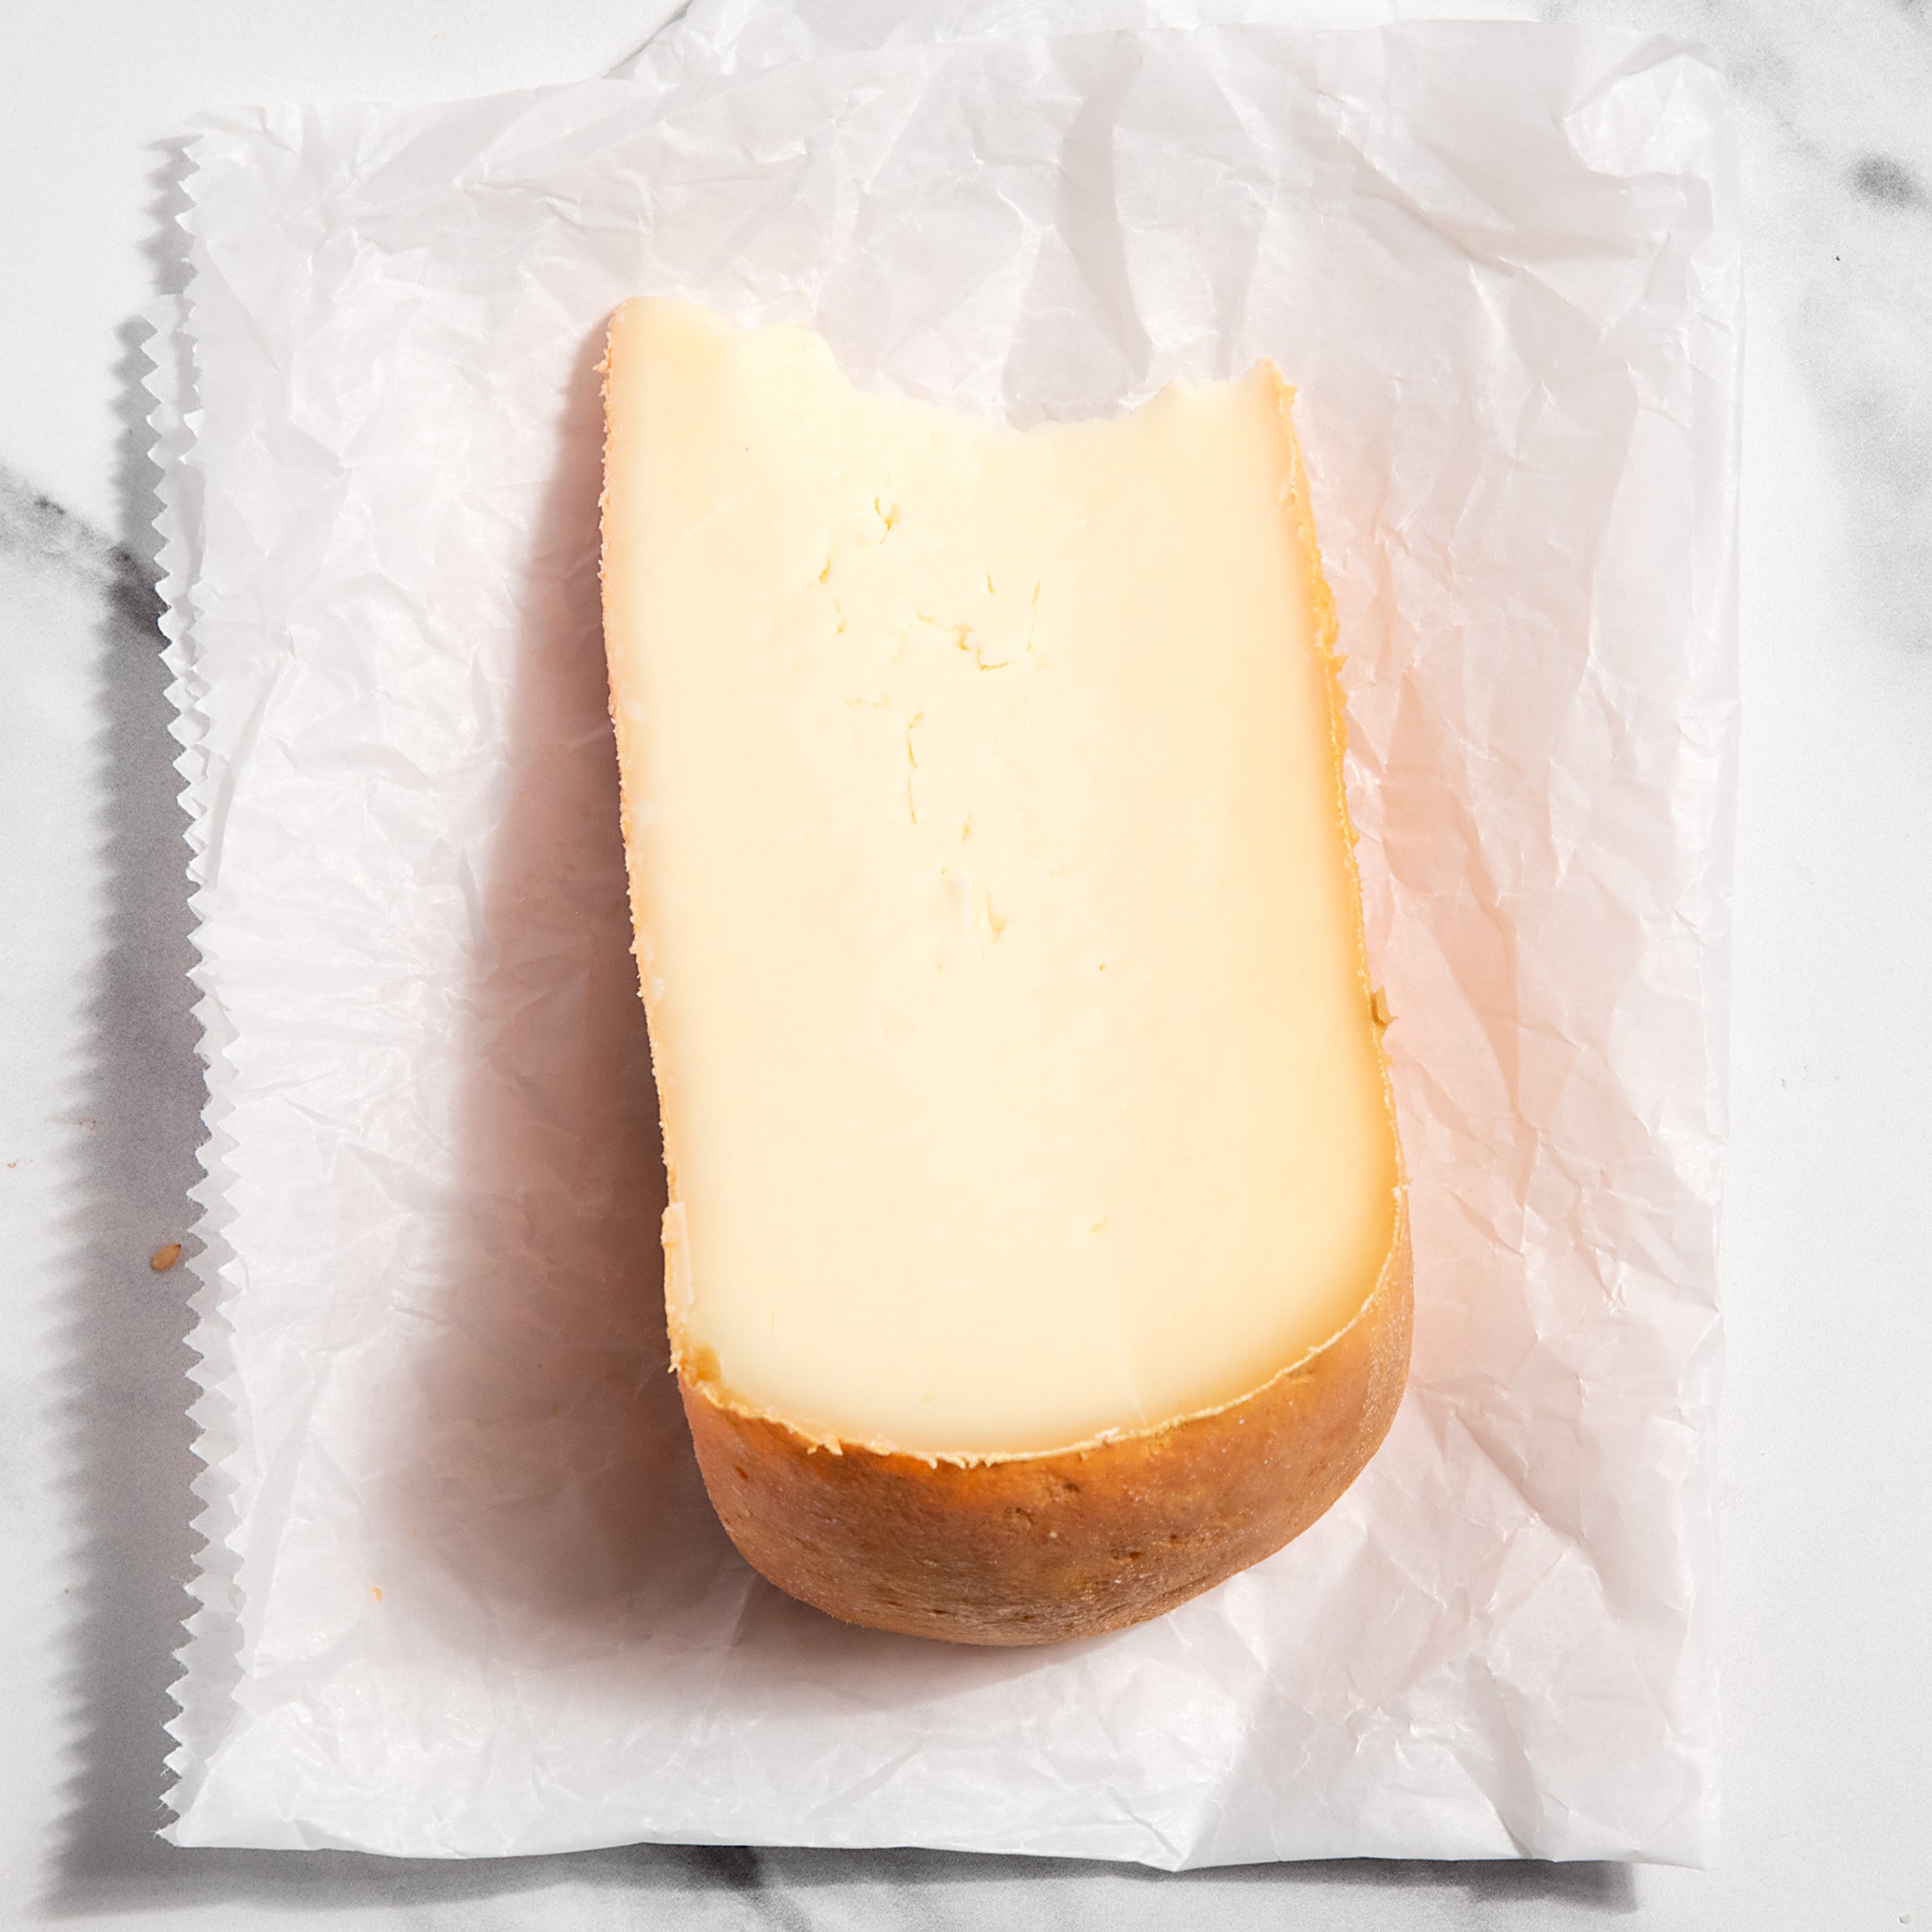 igourmet_15546_Charmoix Belgian Raw Cow's Milk Cheese_La Fermière de Méan_cheese